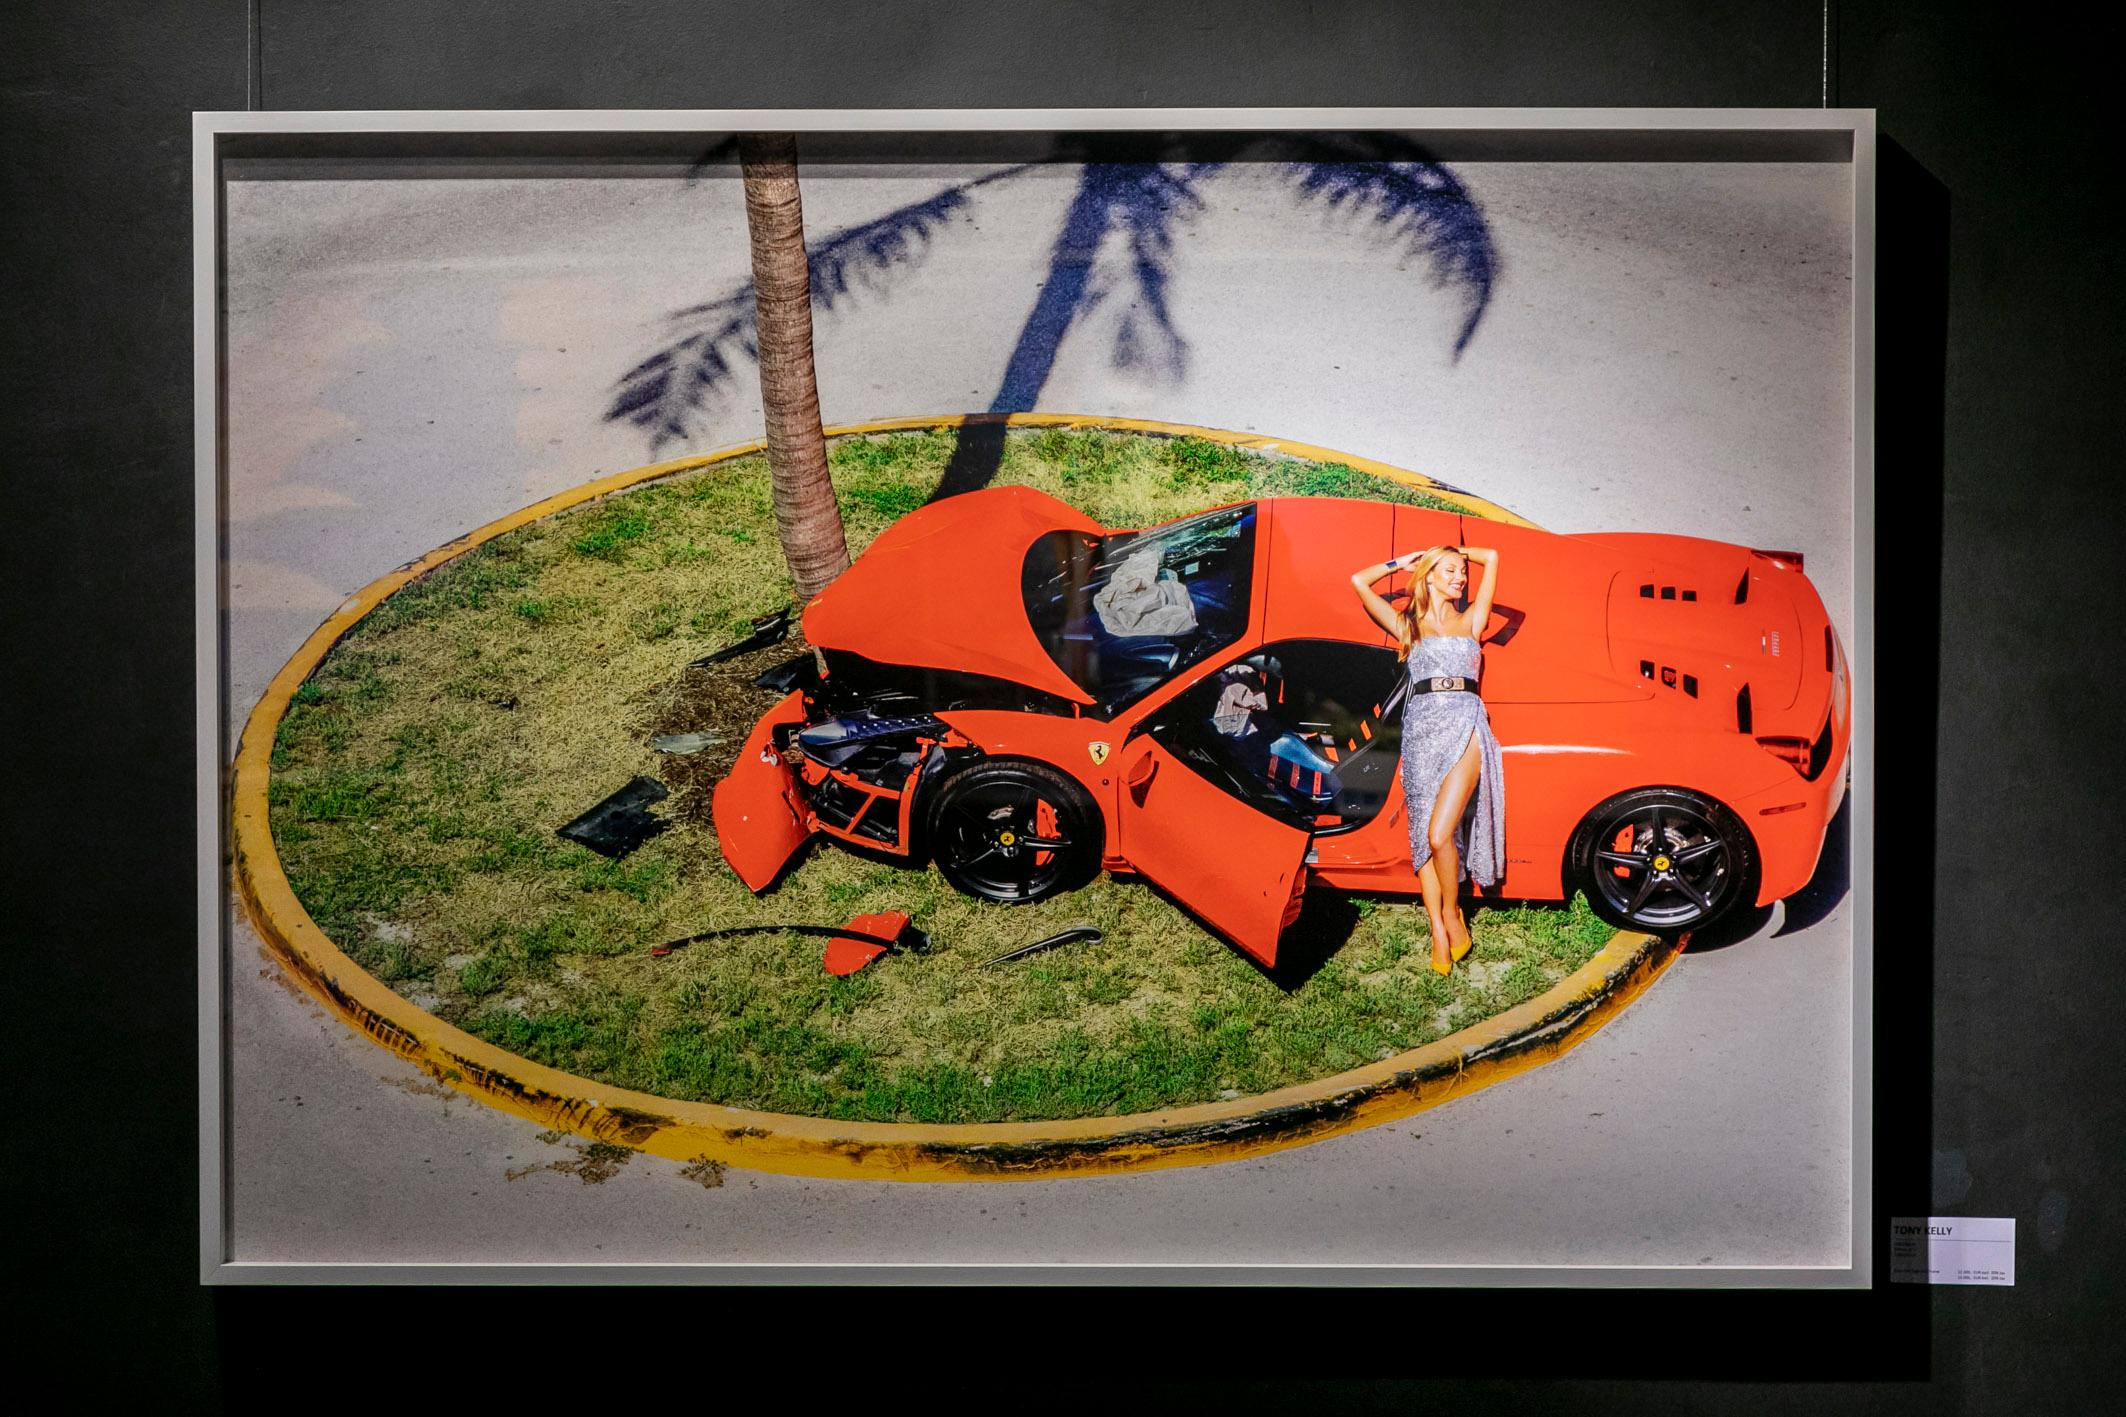 Miami Car Crash - Red Ferrari crashed on a Palmtree, fine art photography, 2019 - Photograph by Tony Kelly